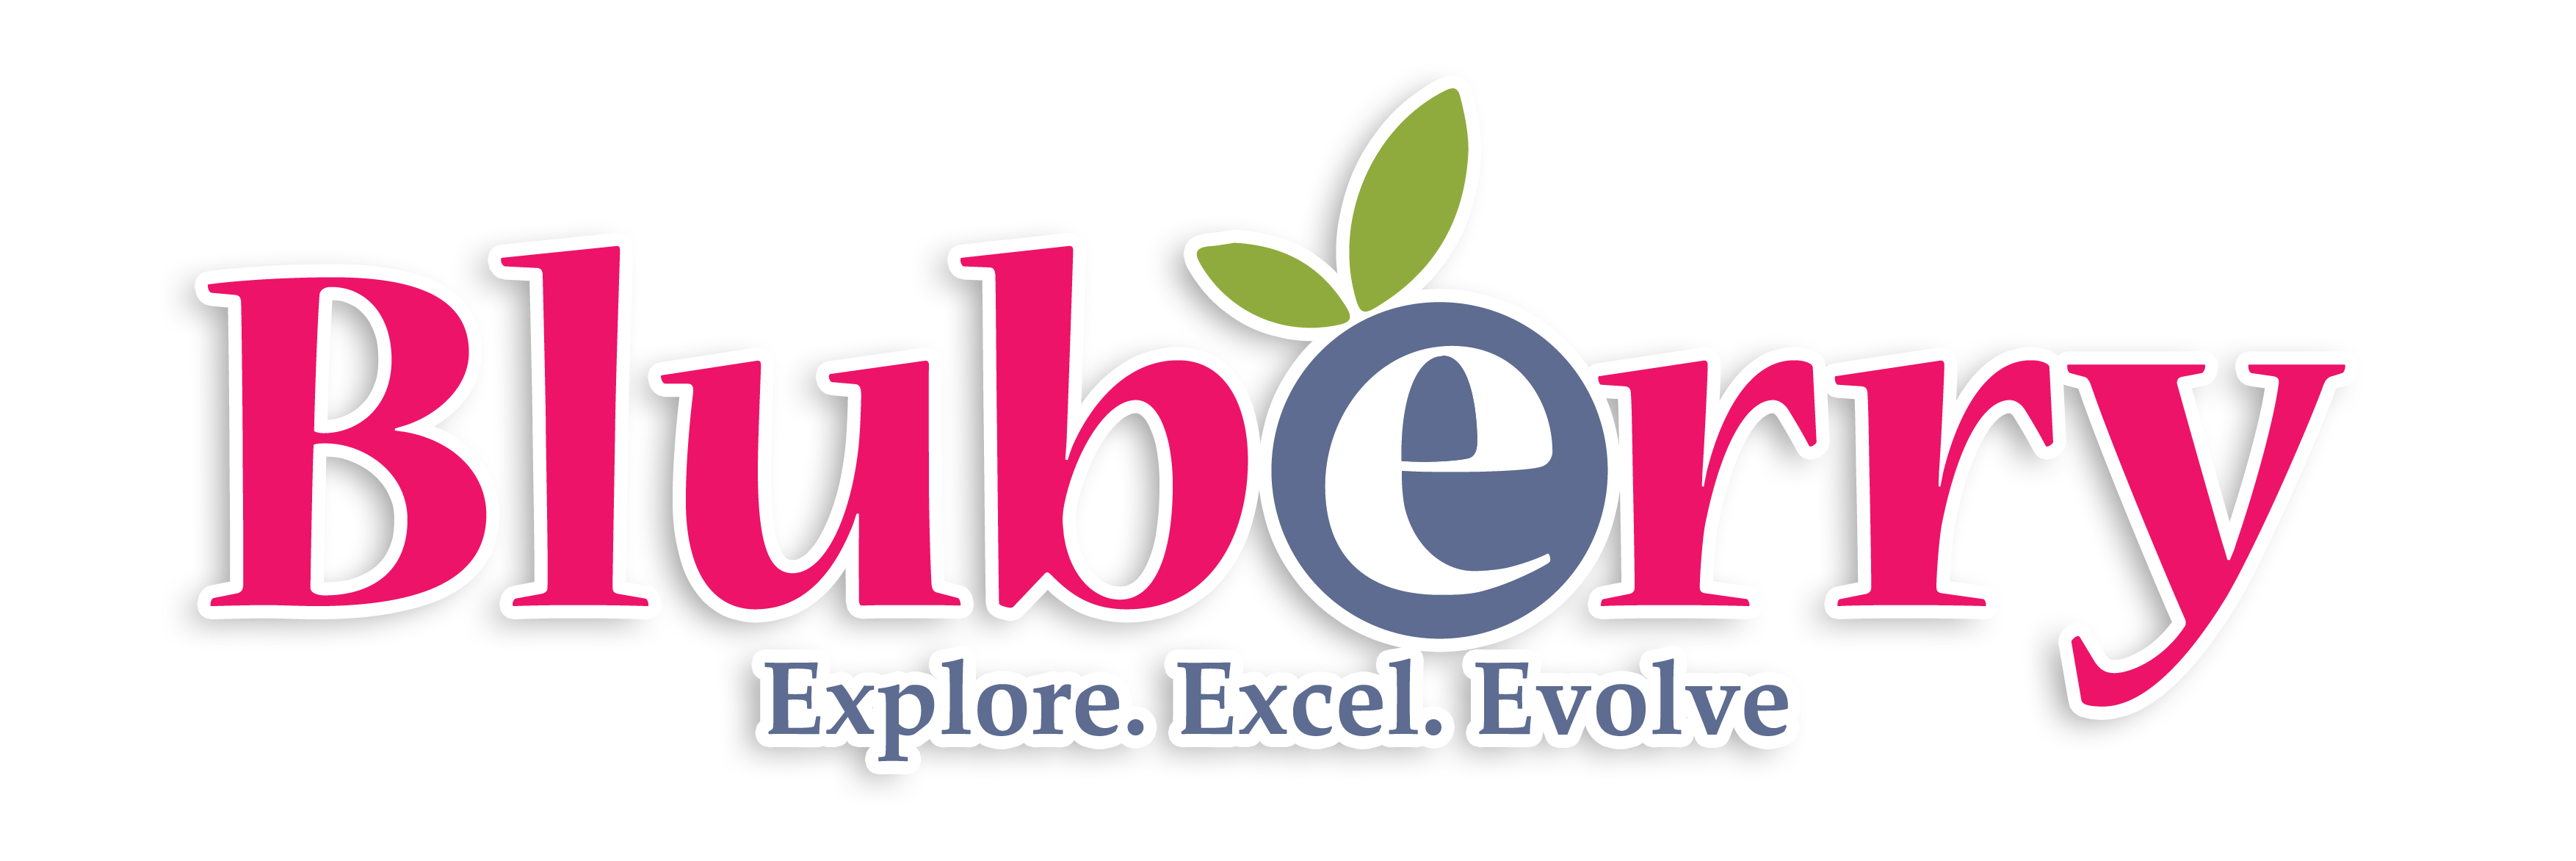 Bluberry logo